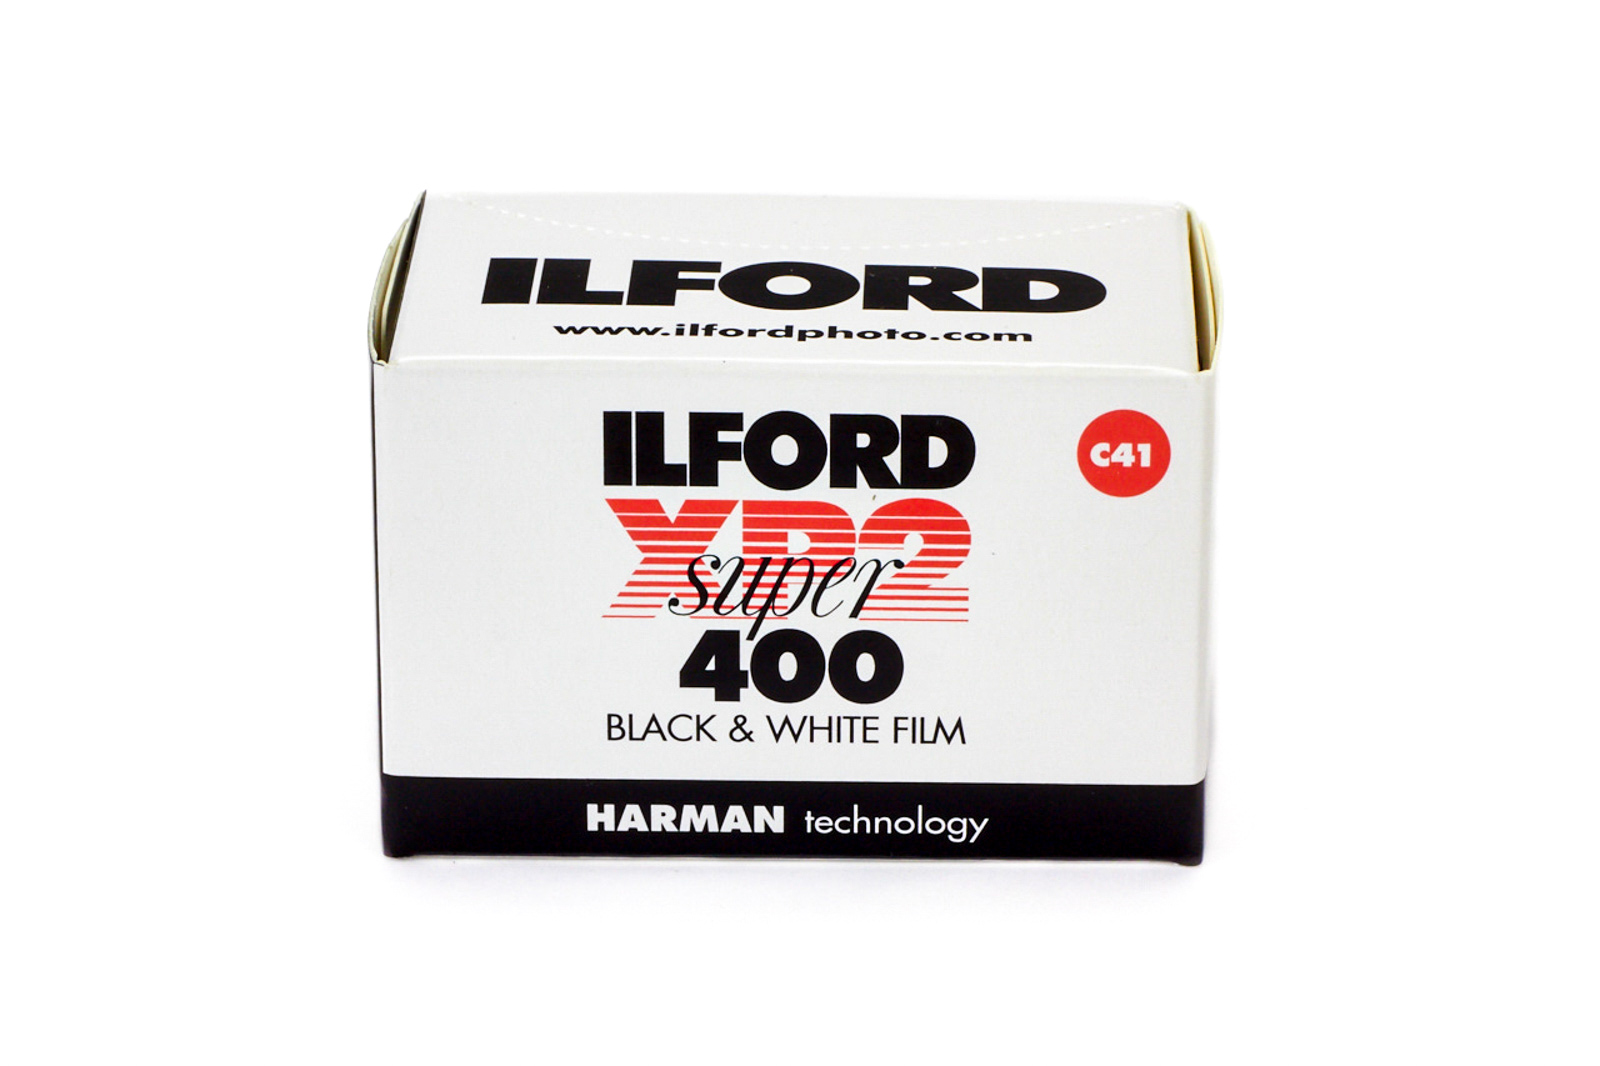 Ilford XP2 400